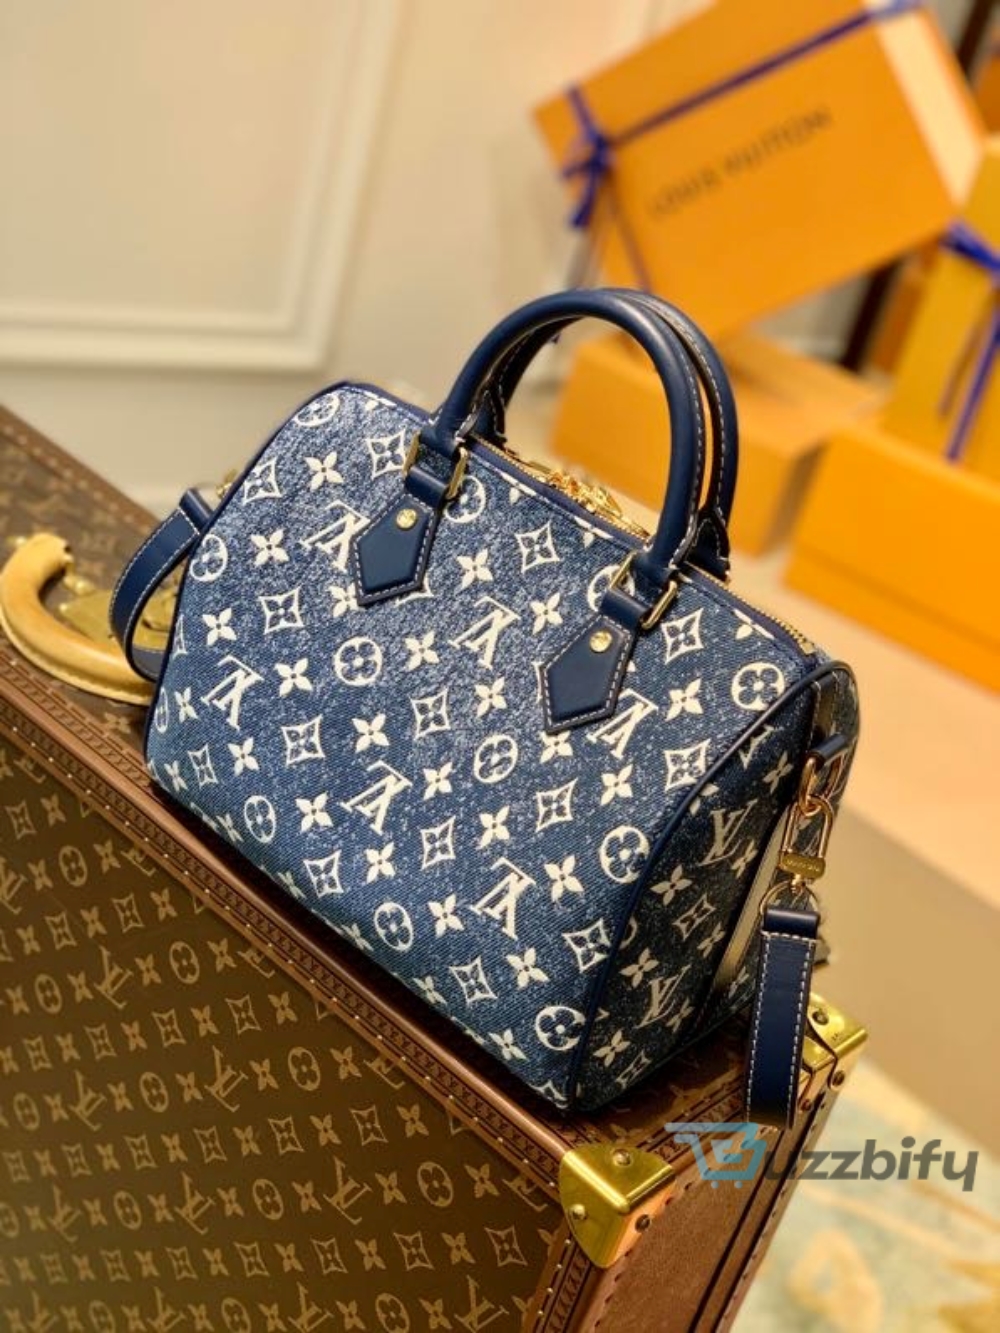 louis vuitton speedy bandouliere 25 monogram denim jacquard navy blue for women womens handbags 98in25cm lv m59609 2799 buzzbify 1 5